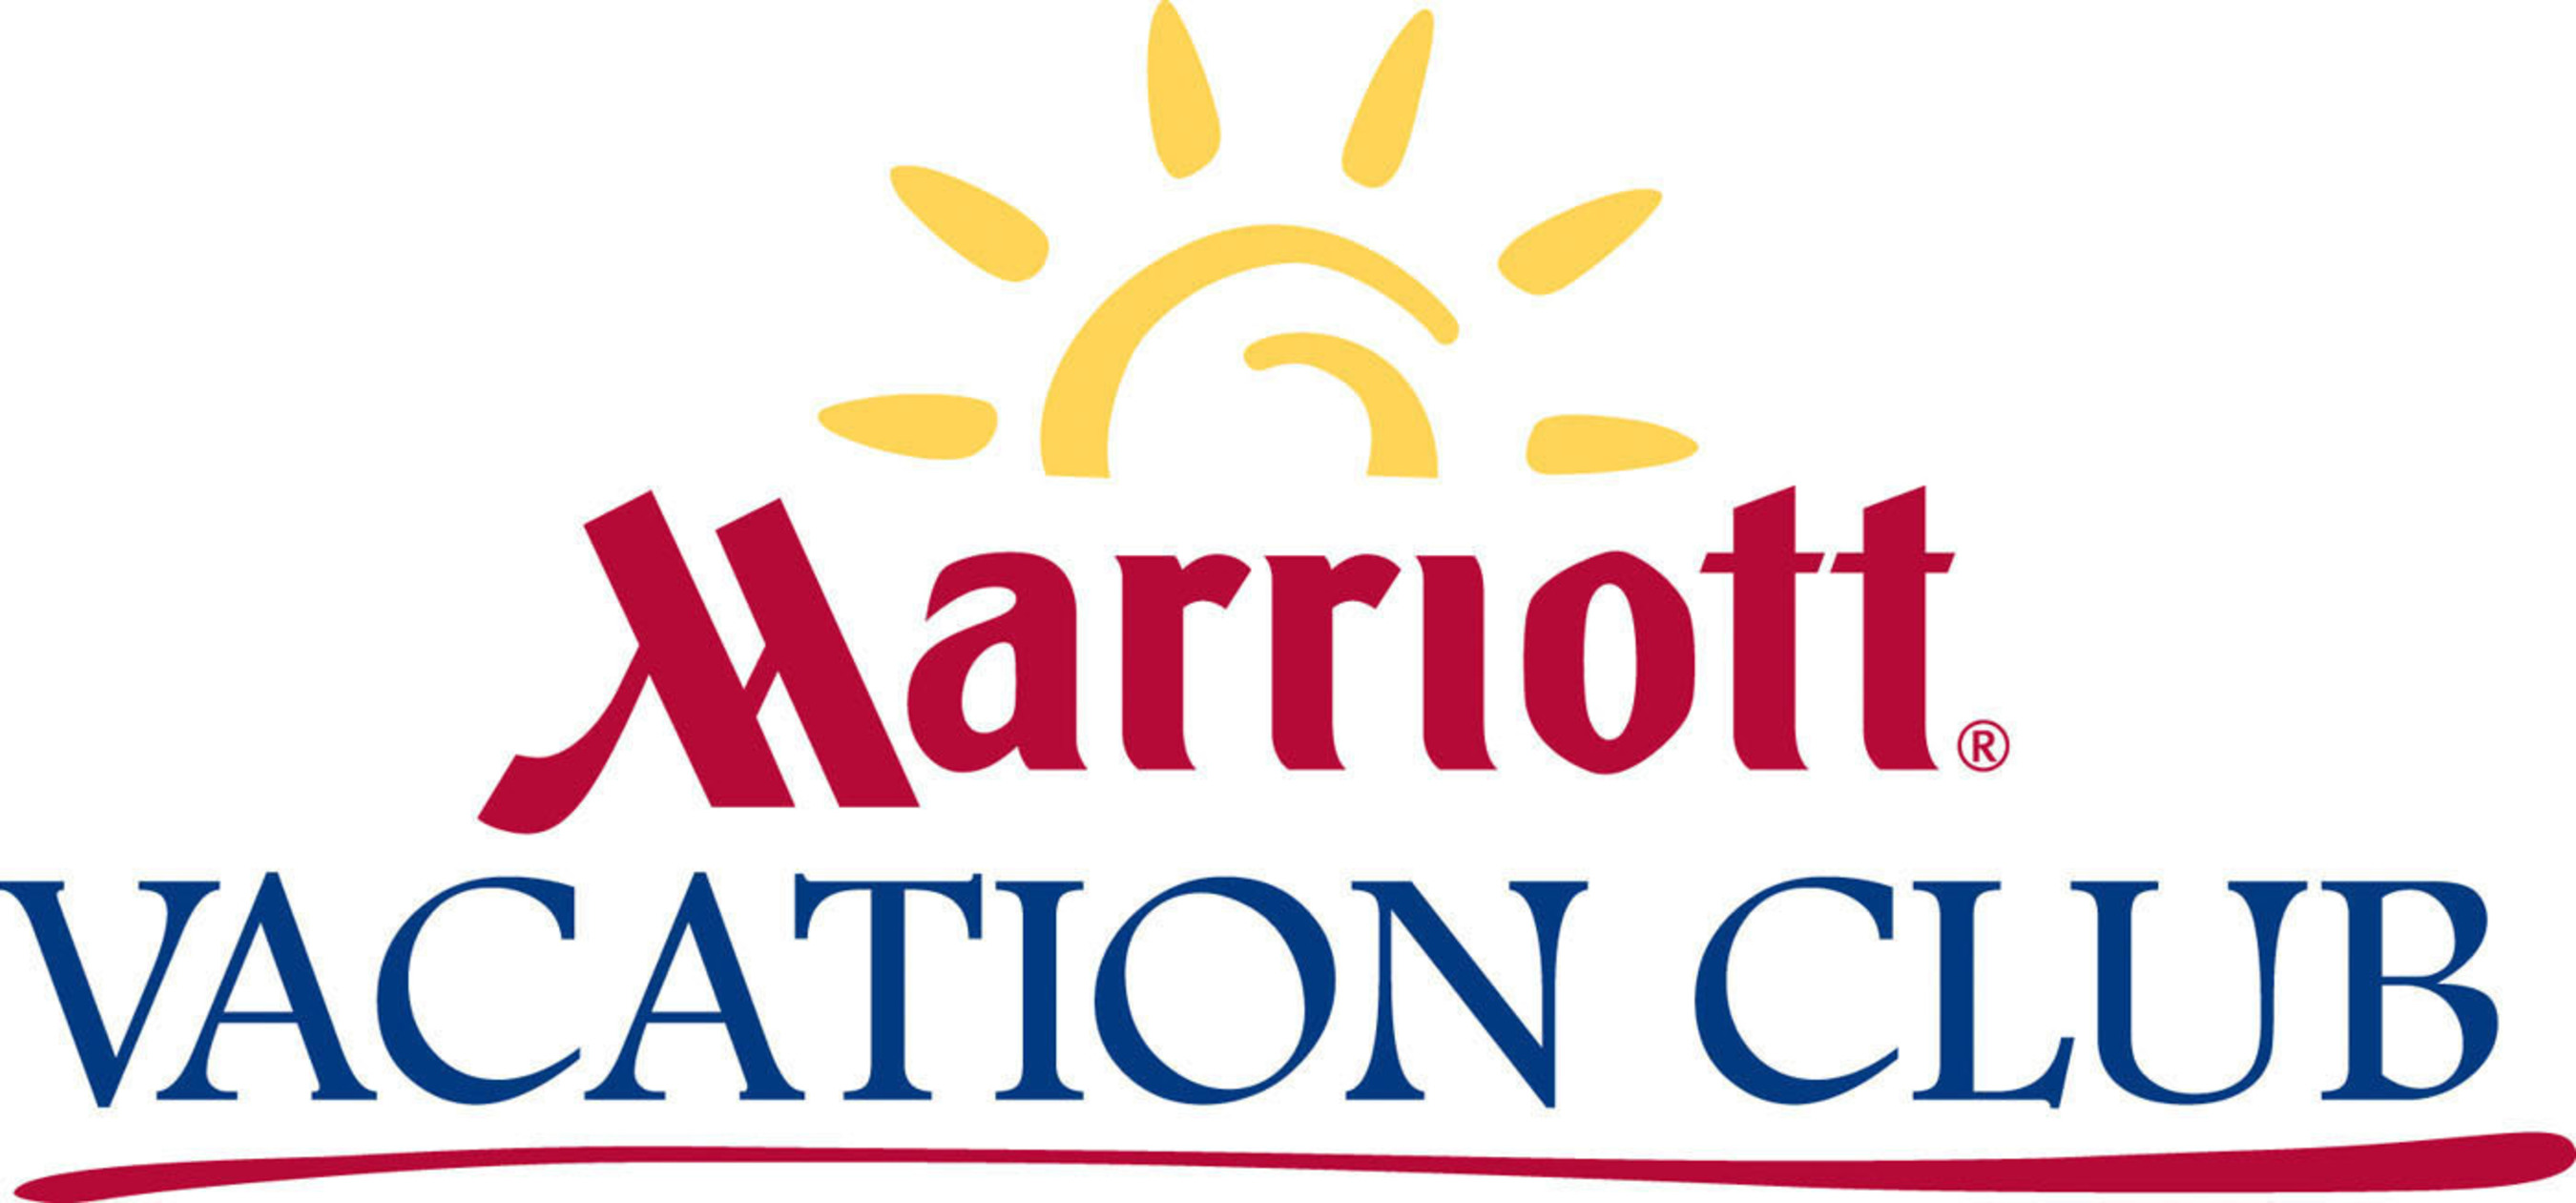 marriott vacations club